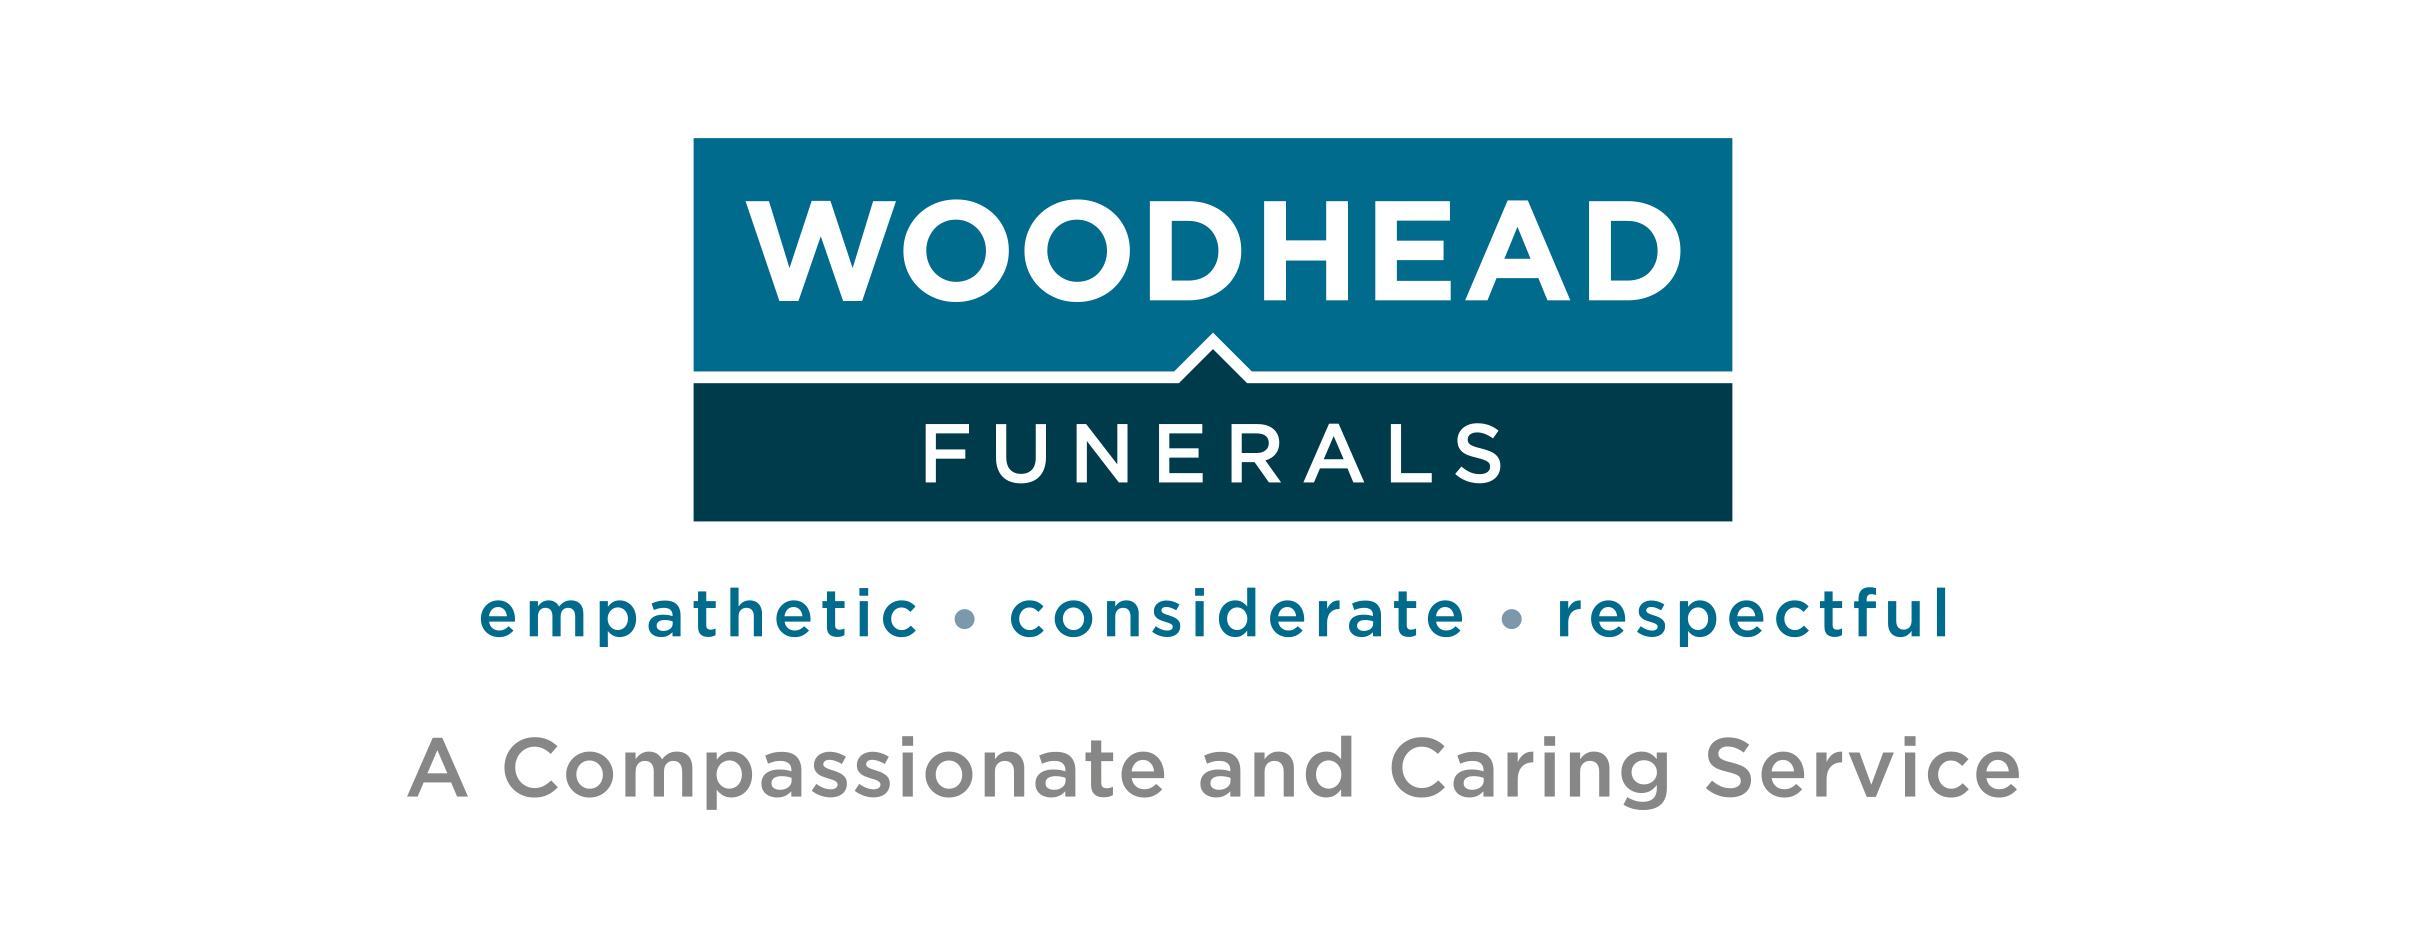 Woodhead Funerals Logo